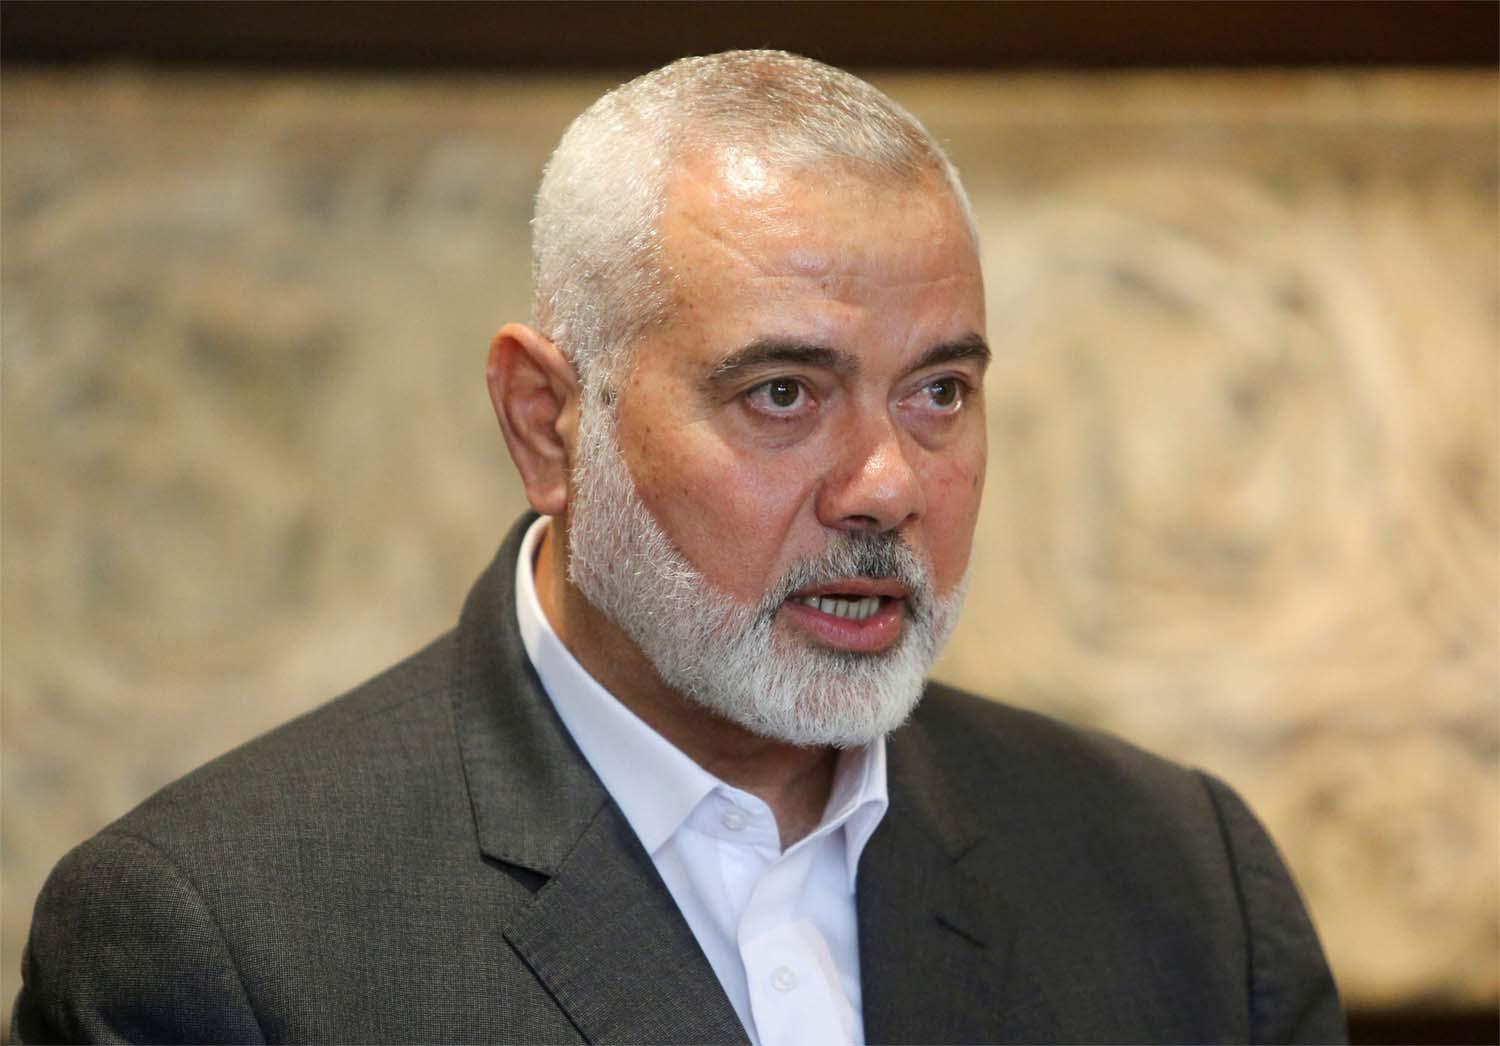 Hamas chief Ismail Haniyeh 